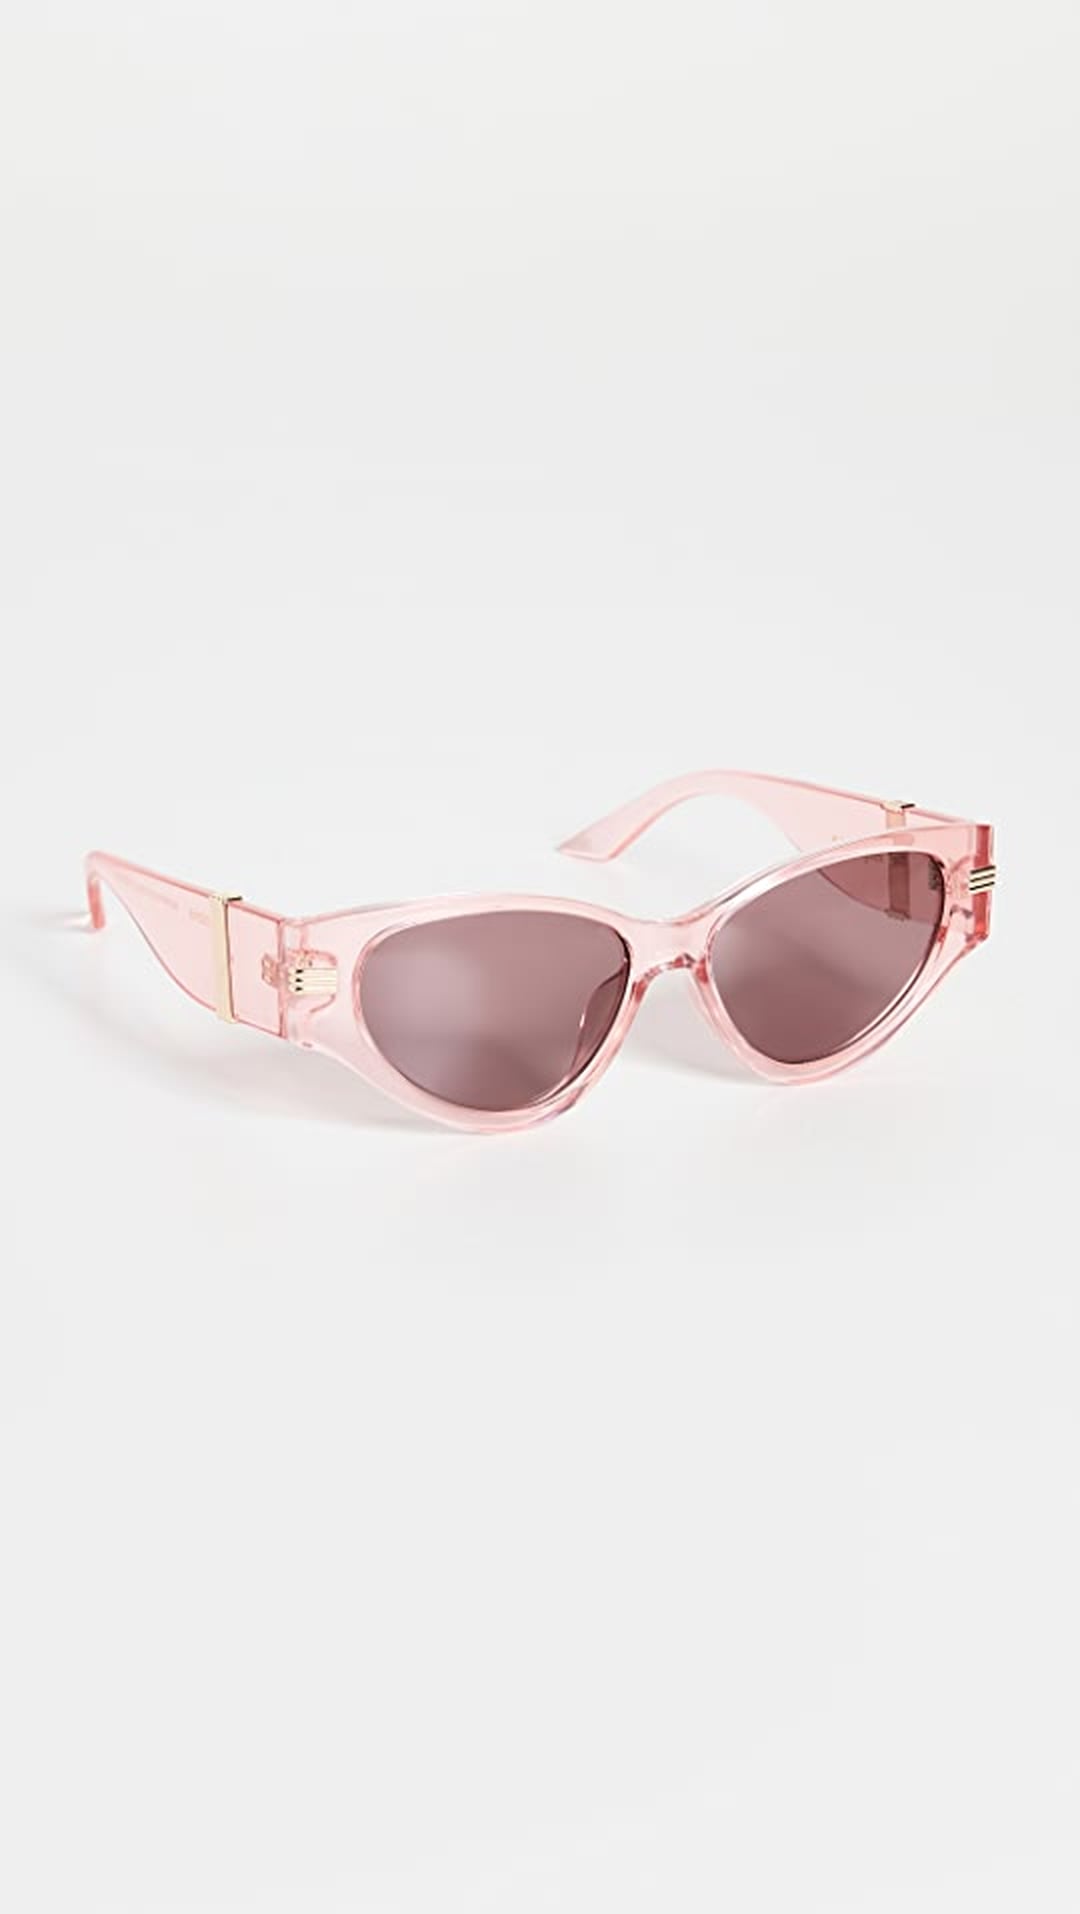 Best Colorful Sunglasses | POPSUGAR Fashion